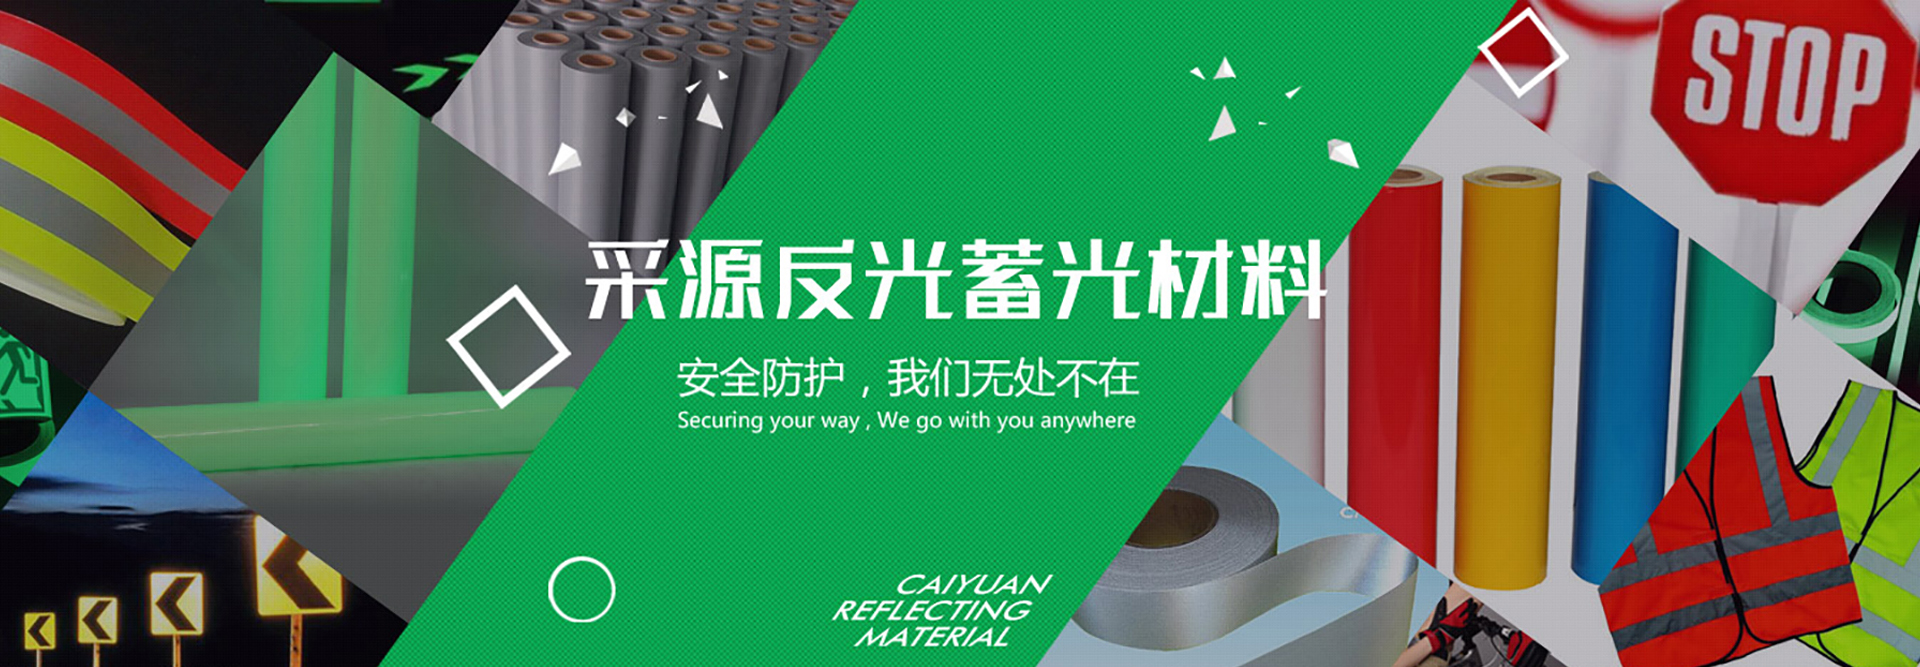 Zhejiang Caiyuan Reflective Material Co., Ltd.